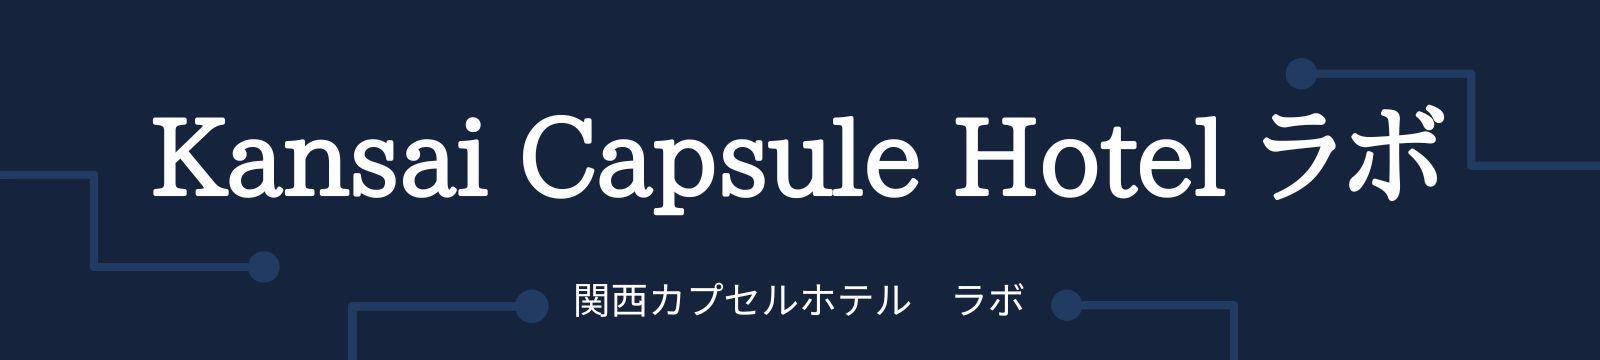 Kansai Capsule Hotel ラボ